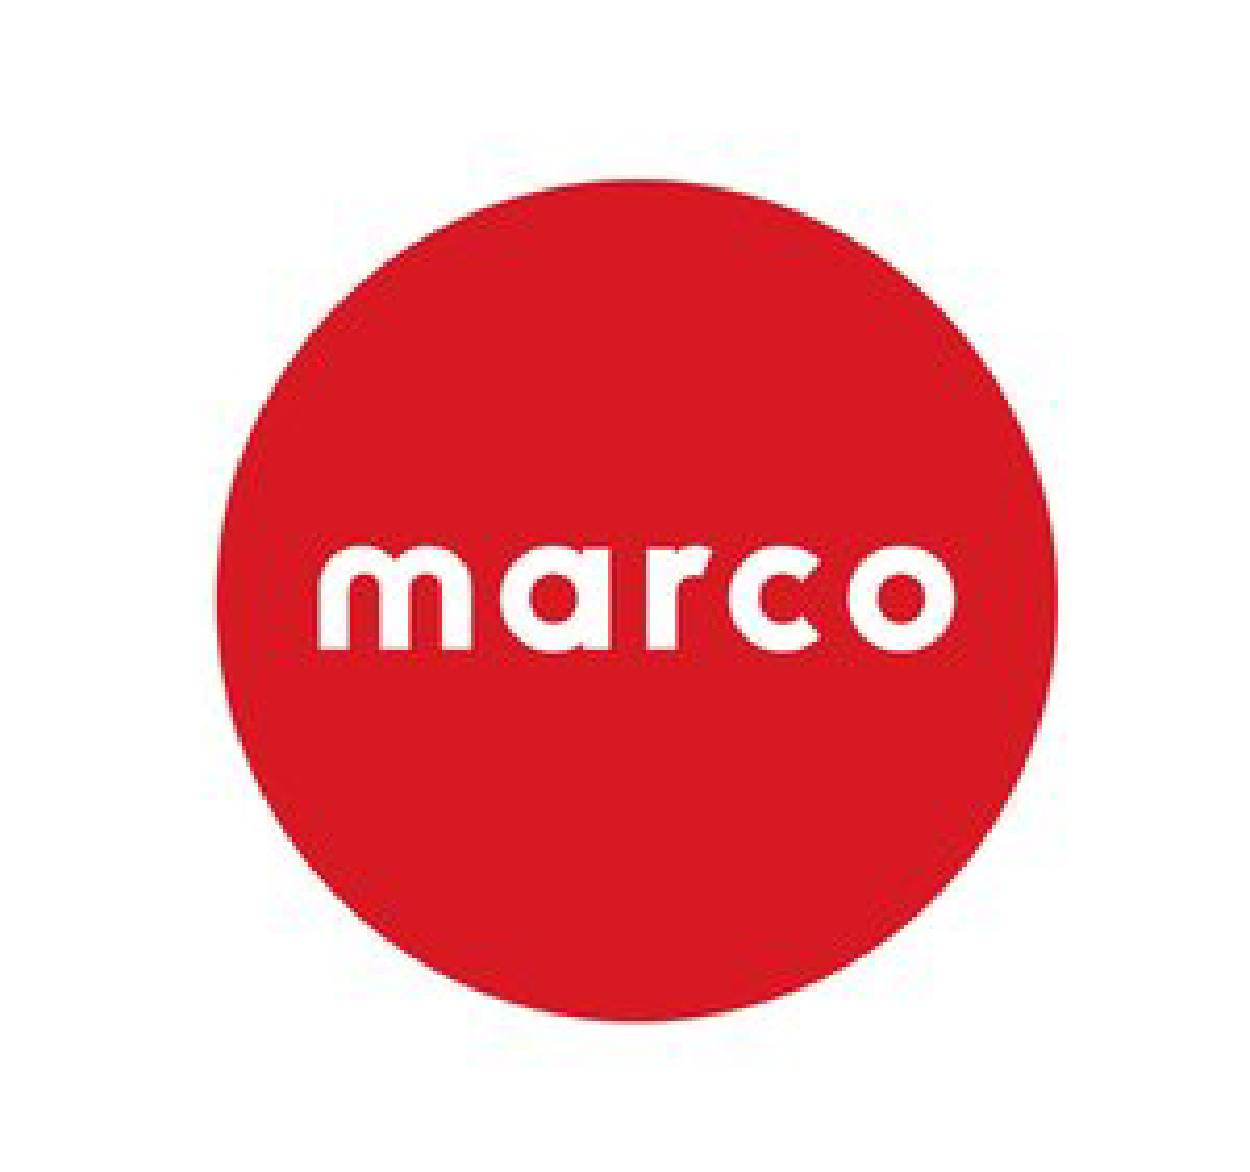 Marco_final_logo_aw.png